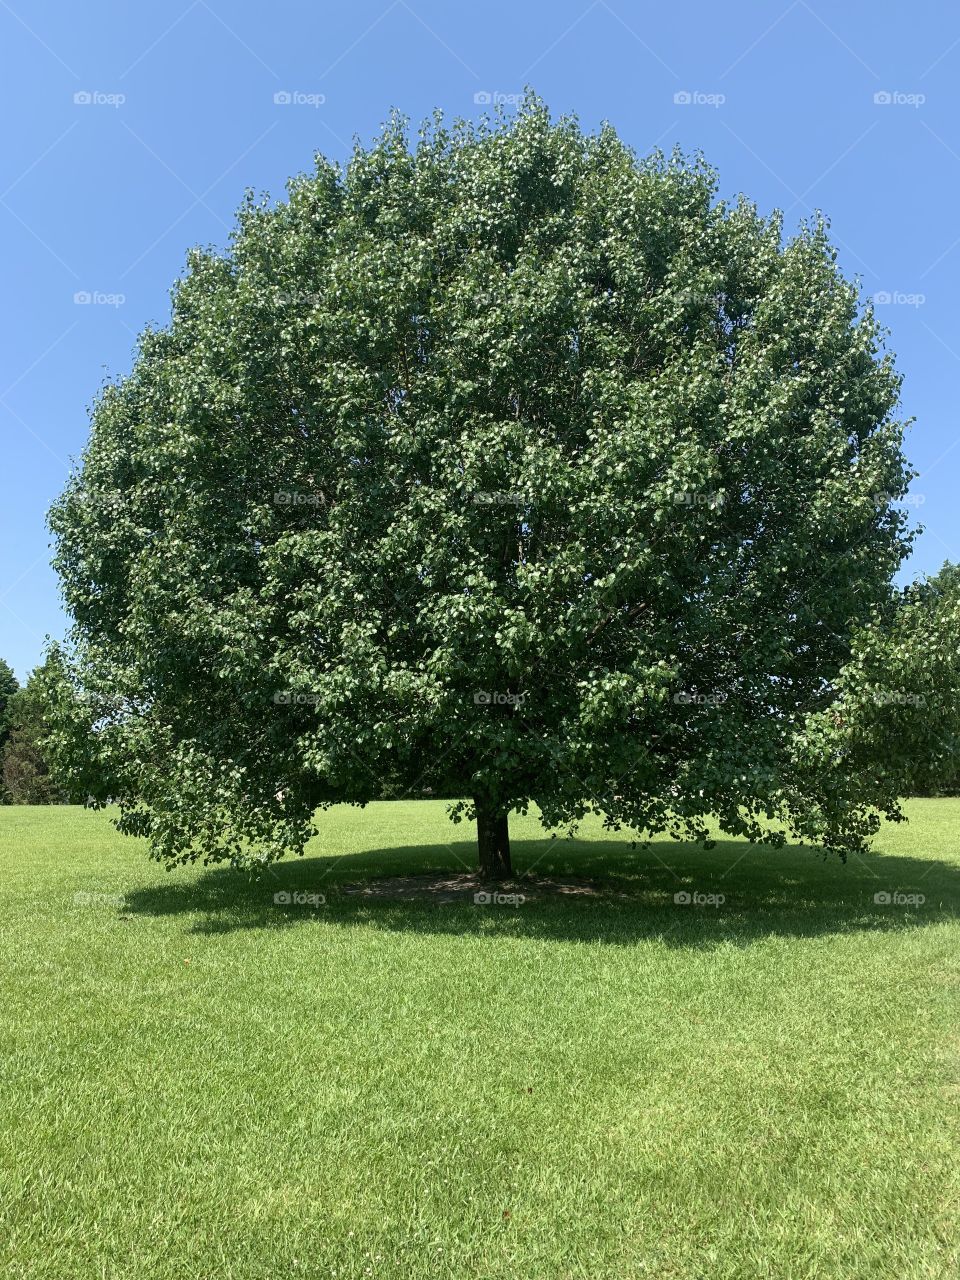 THIS TREE HAS LIFE! 